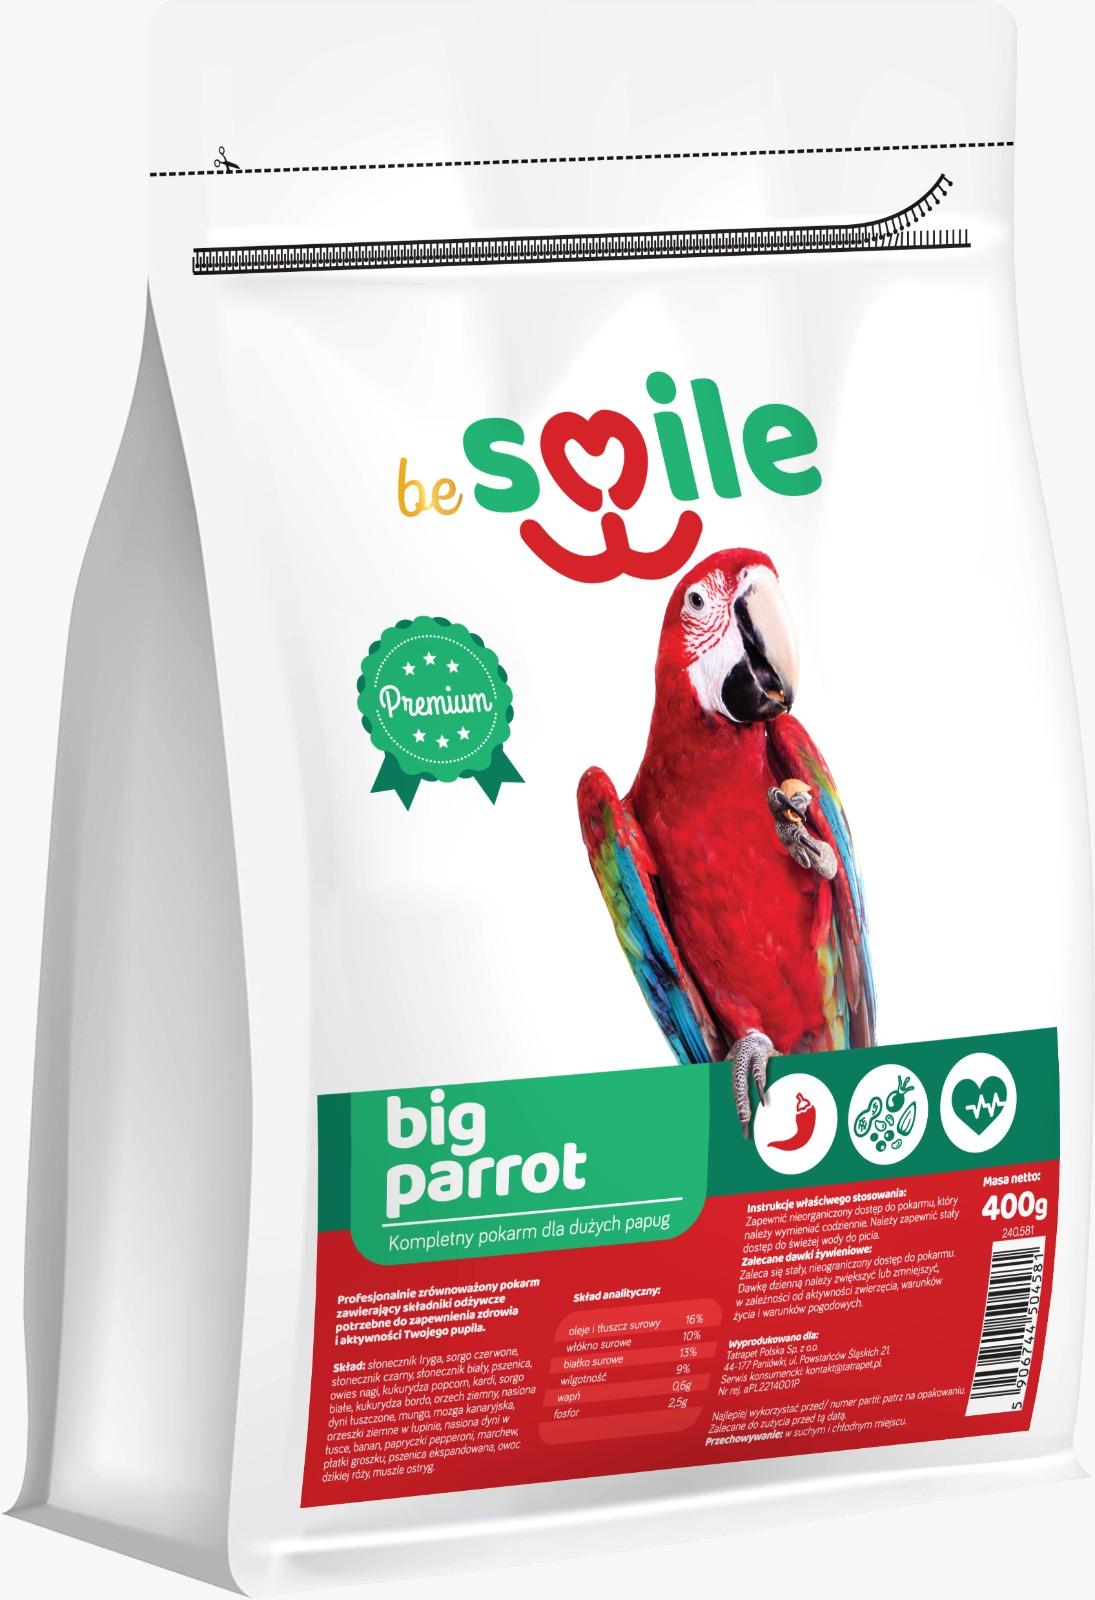 beSMILE PARROT - Big Parrot 400g food for large parrots